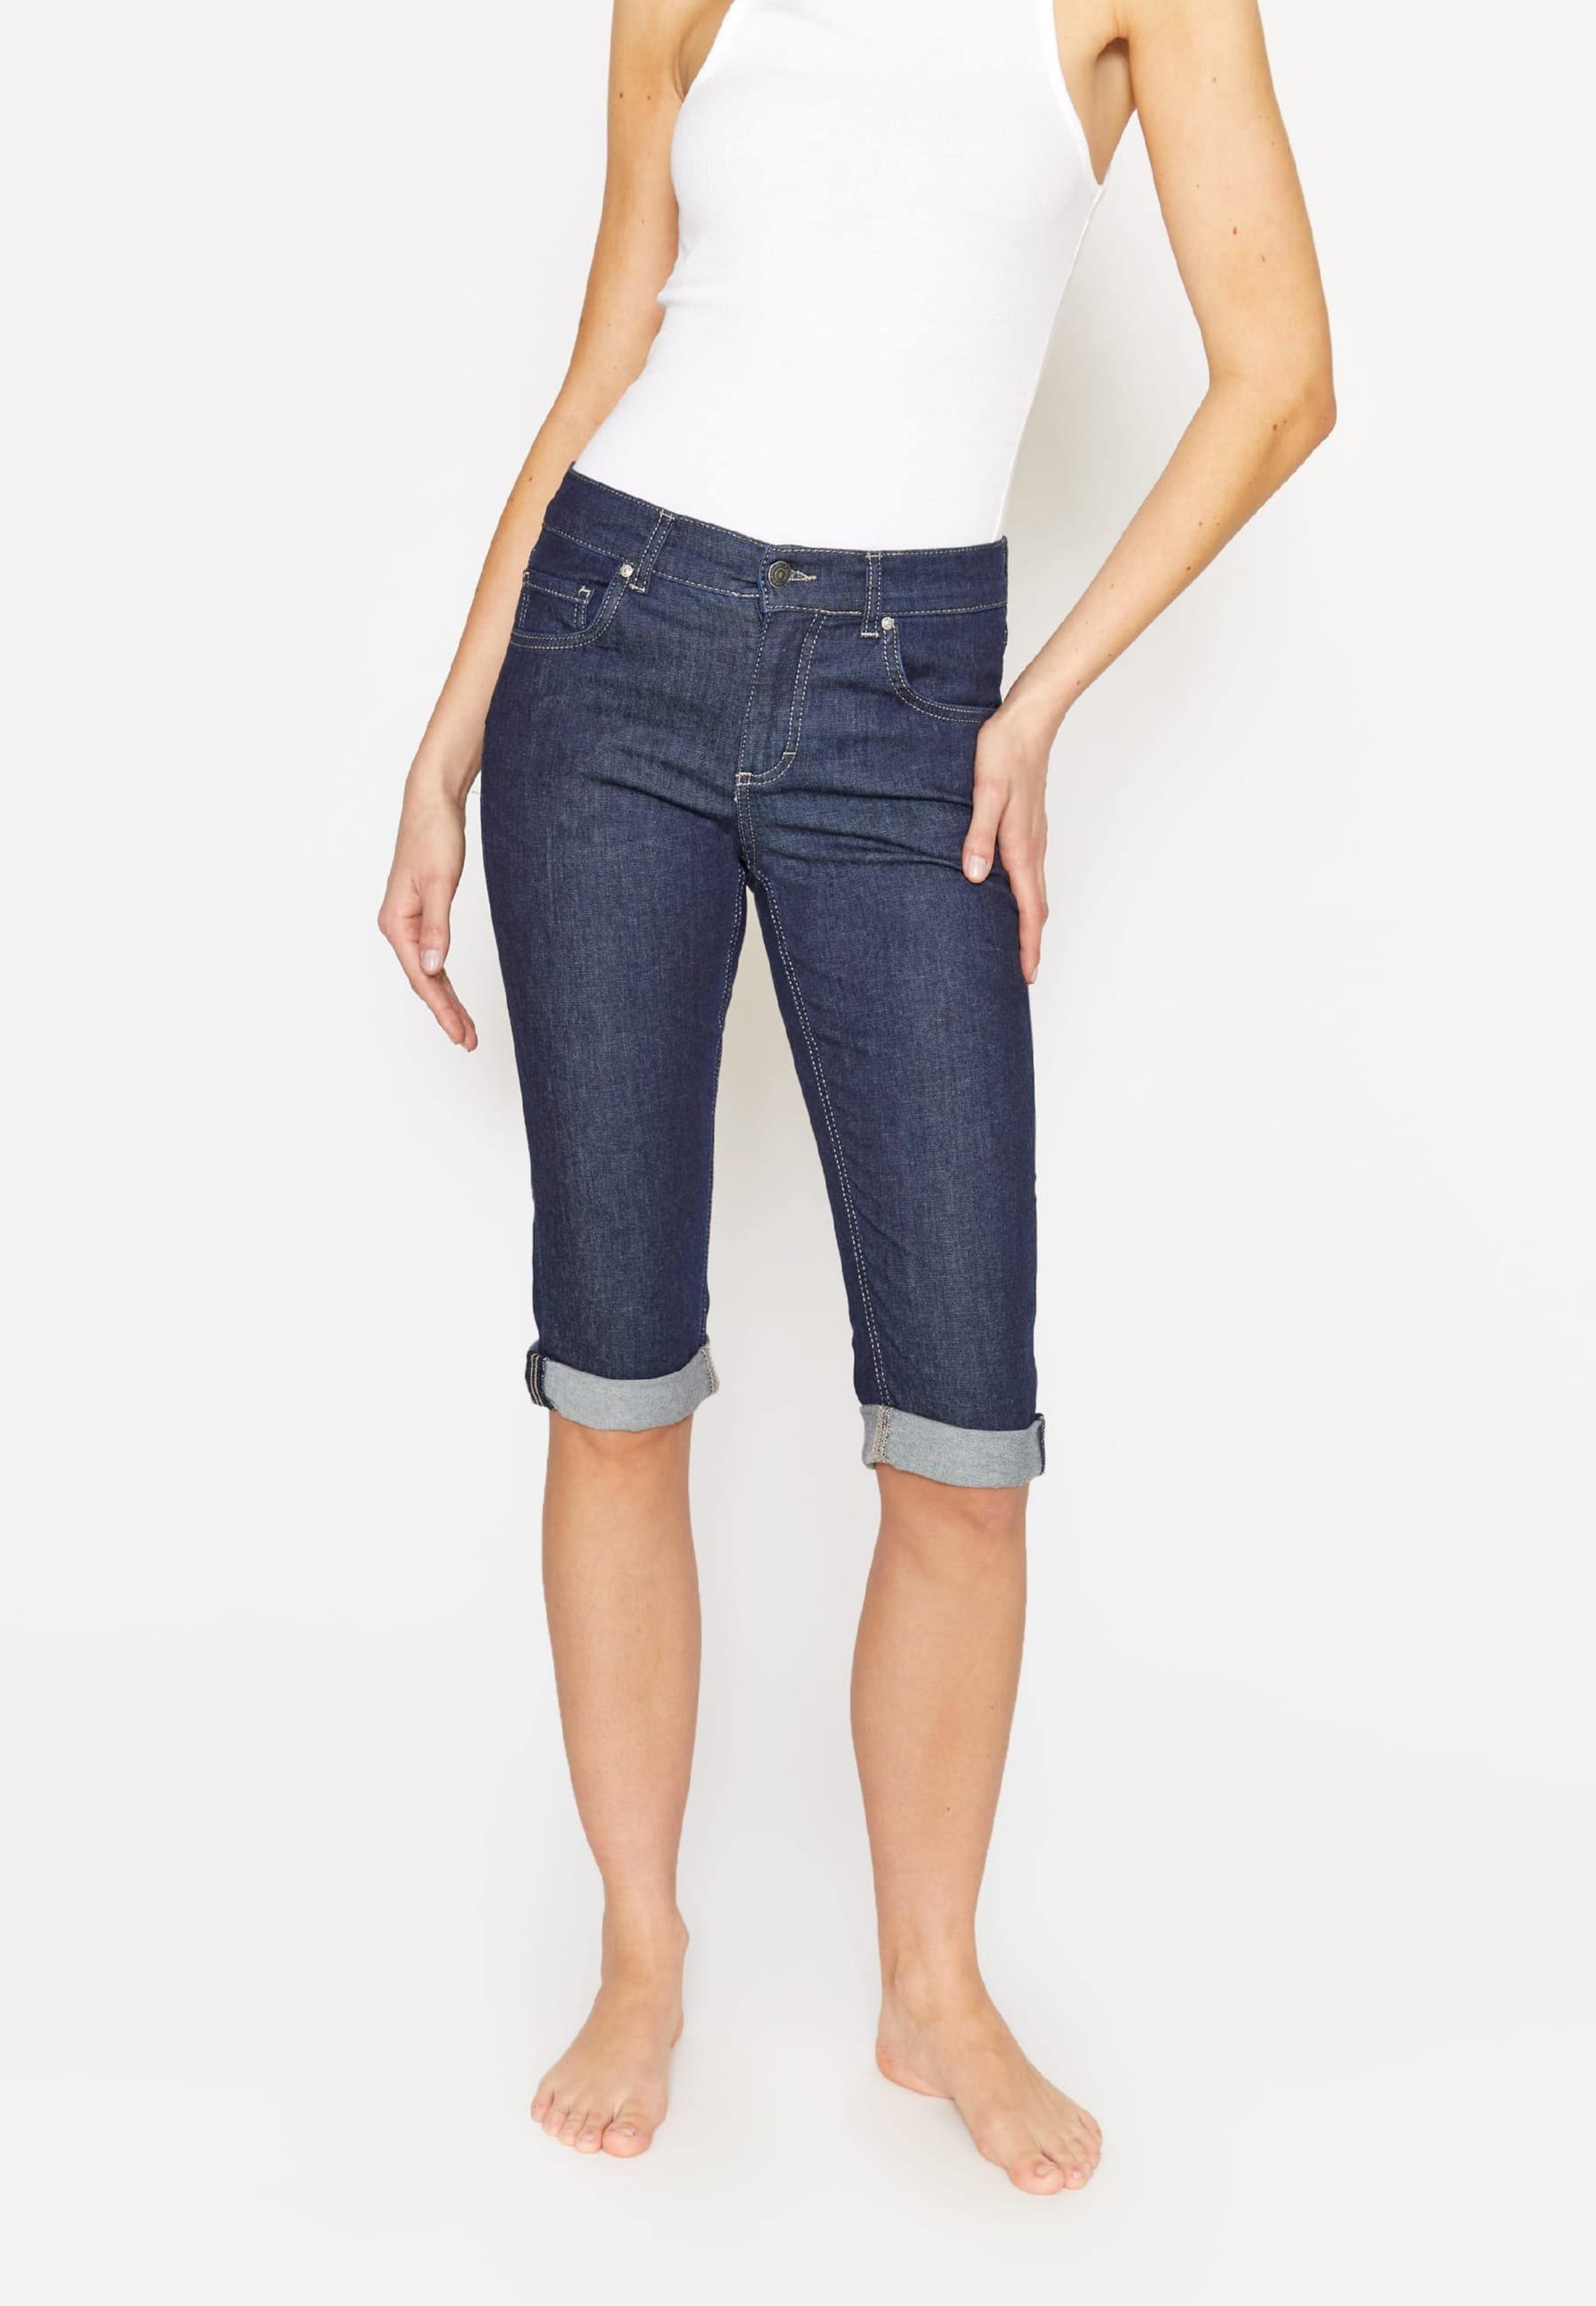 ANGELS 5-Pocket-Jeans Jeans Capri TU Stoffgewicht: oz 7,5 Used-Look Label-Applikationen, mit mit